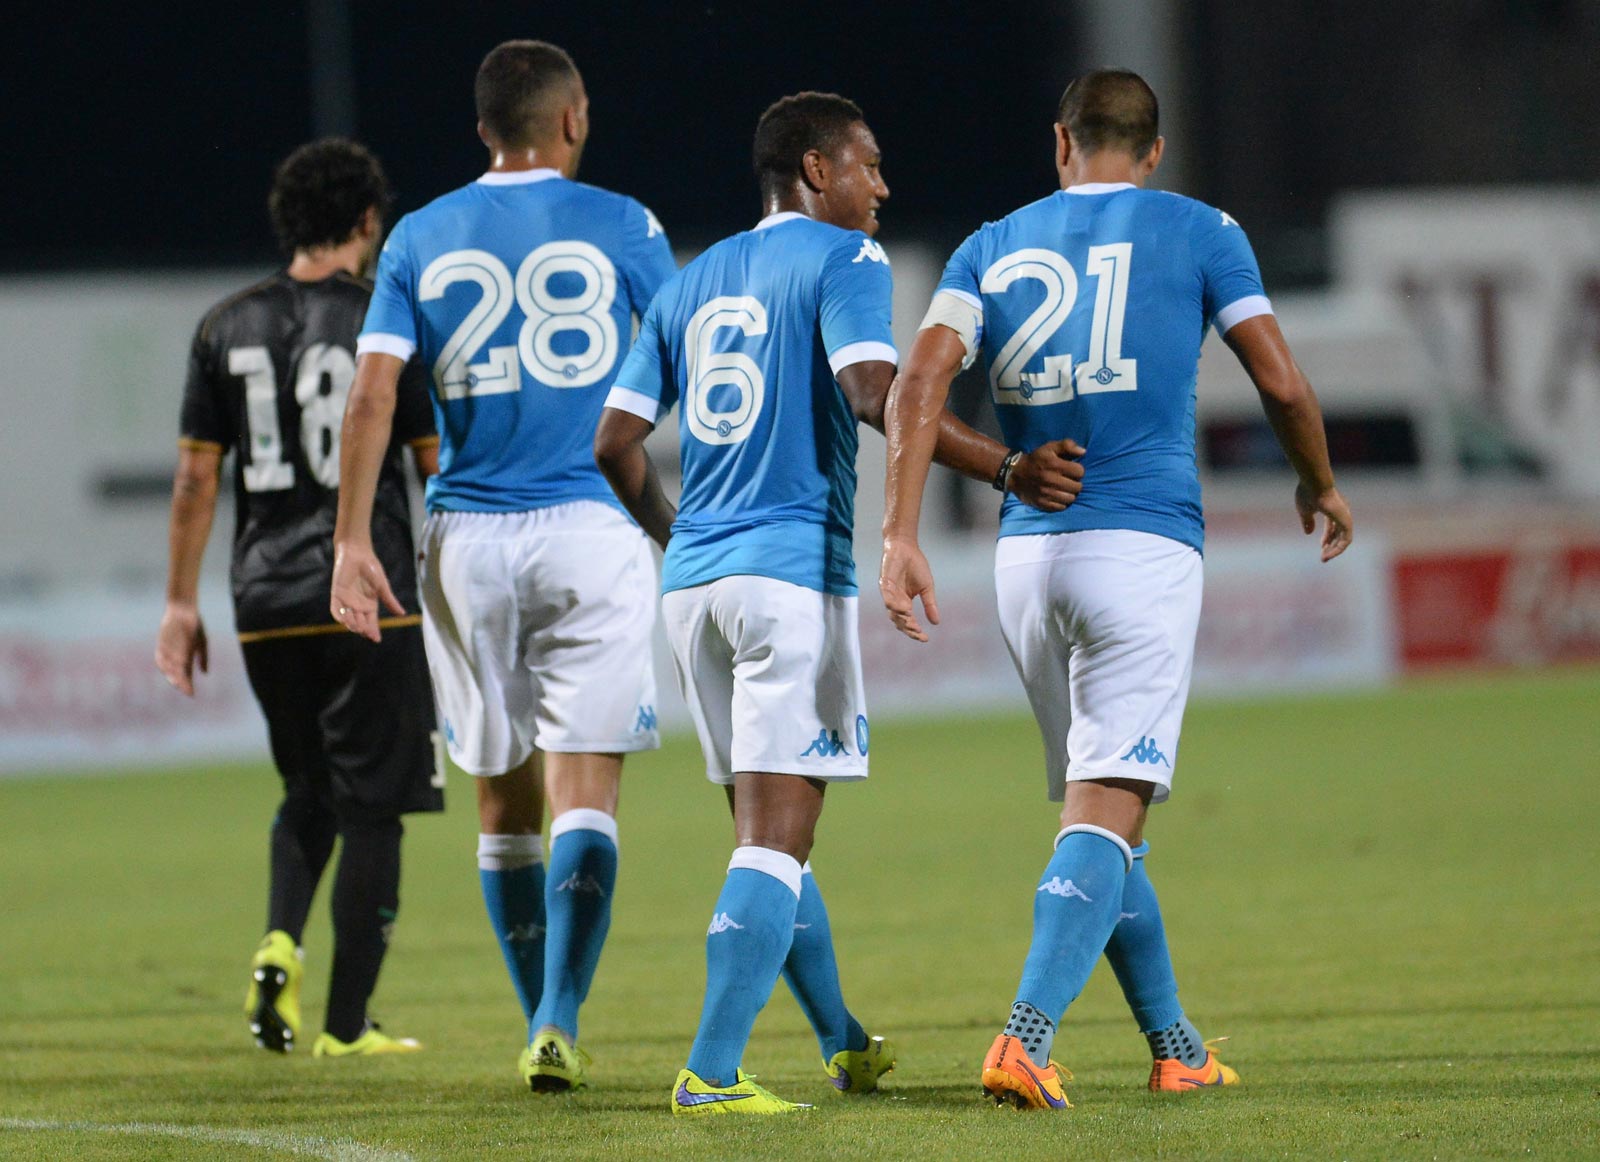 Verona VS Napoli ( BETTING TIPS, Match Preview & Expert Analysis )